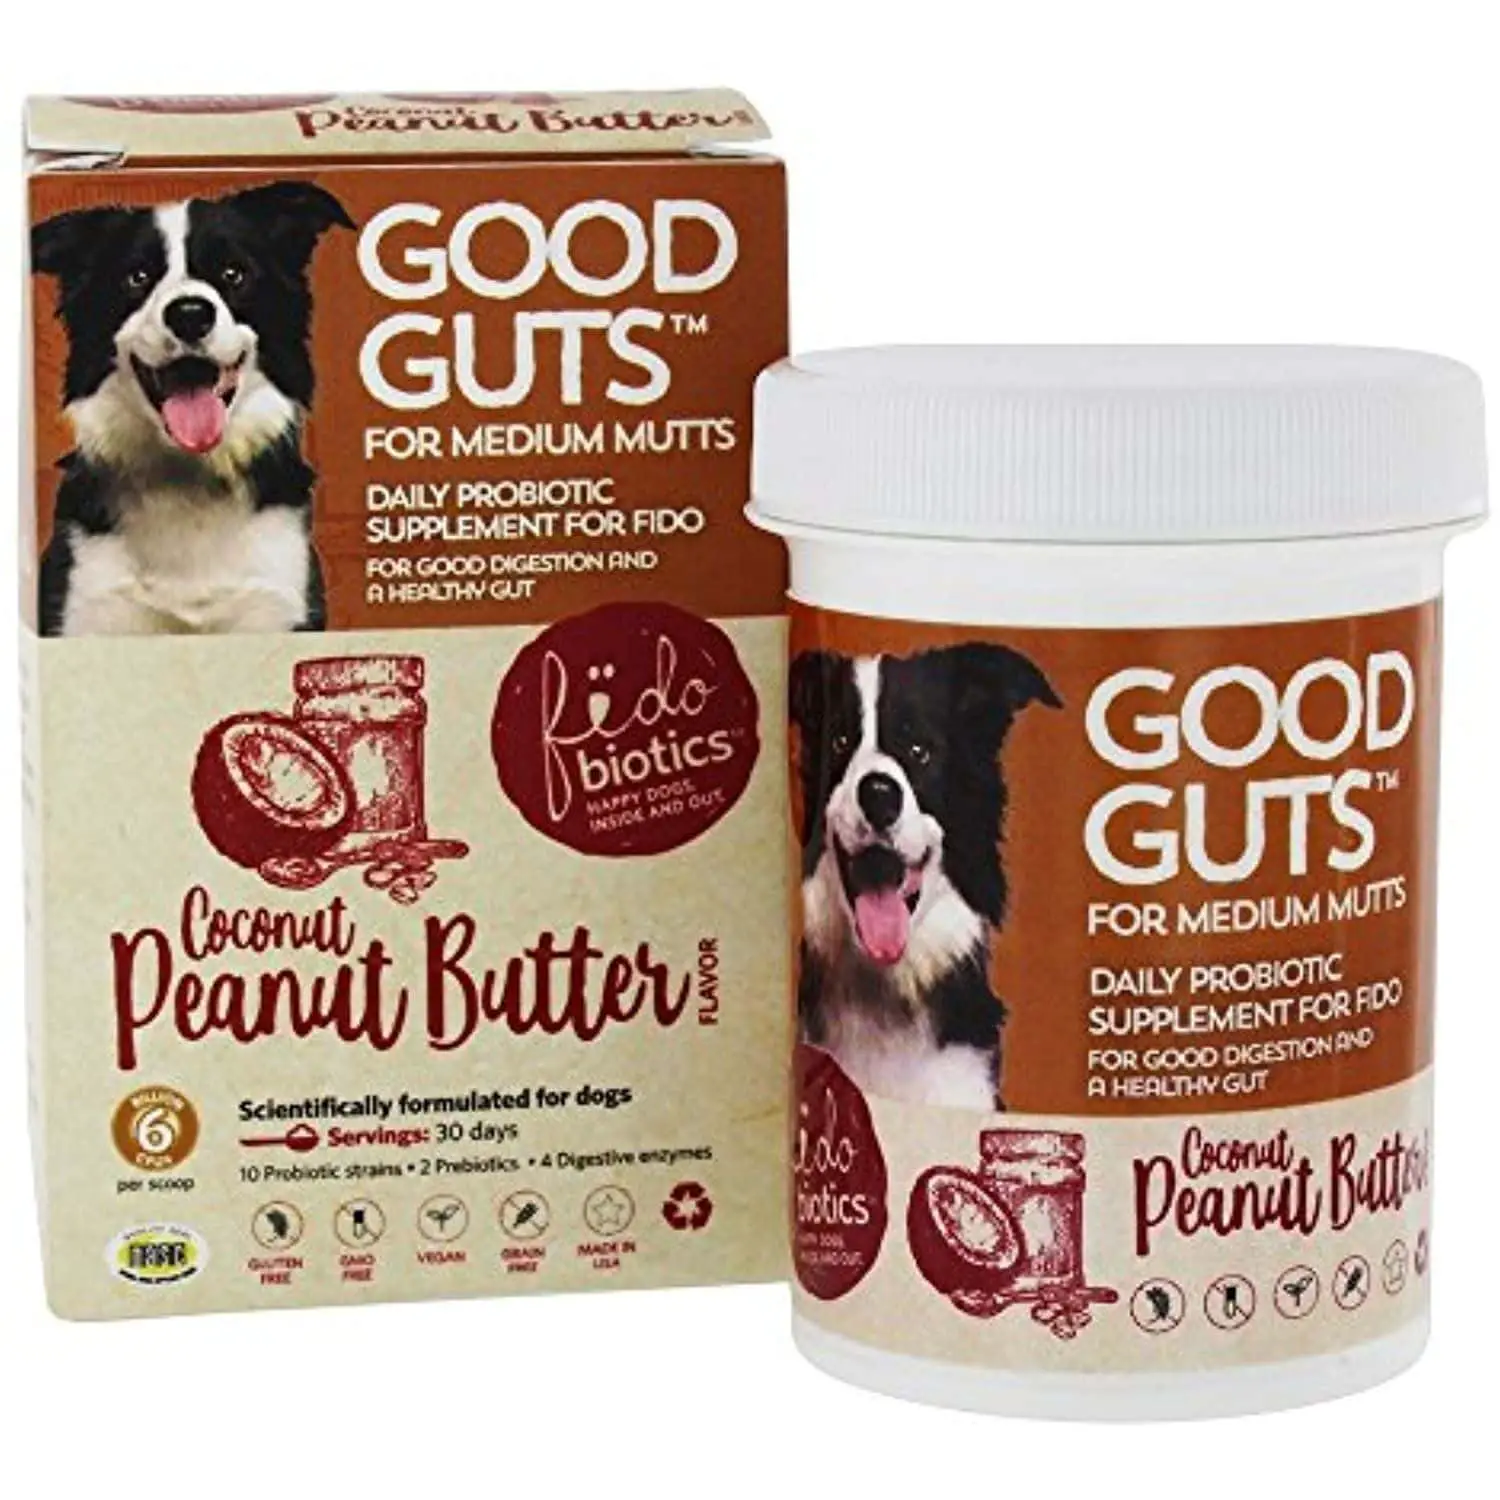 Fidobiotics Good Guts for Medium Mutts, Coconut Peanut Butter Flavored ...